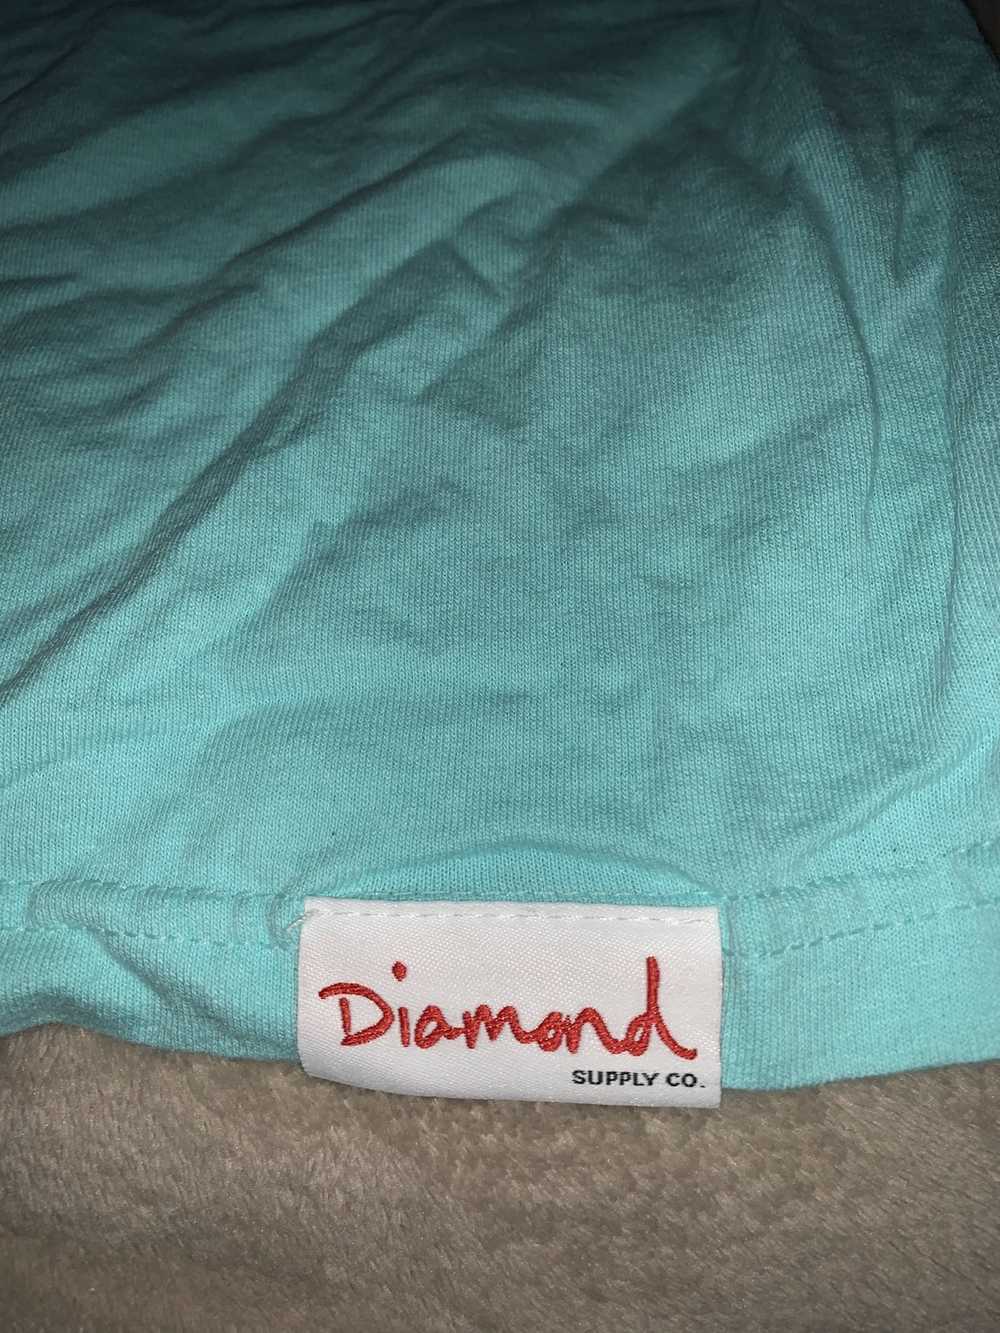 Diamond Supply Co Diamond Supply Co Shirt - image 3